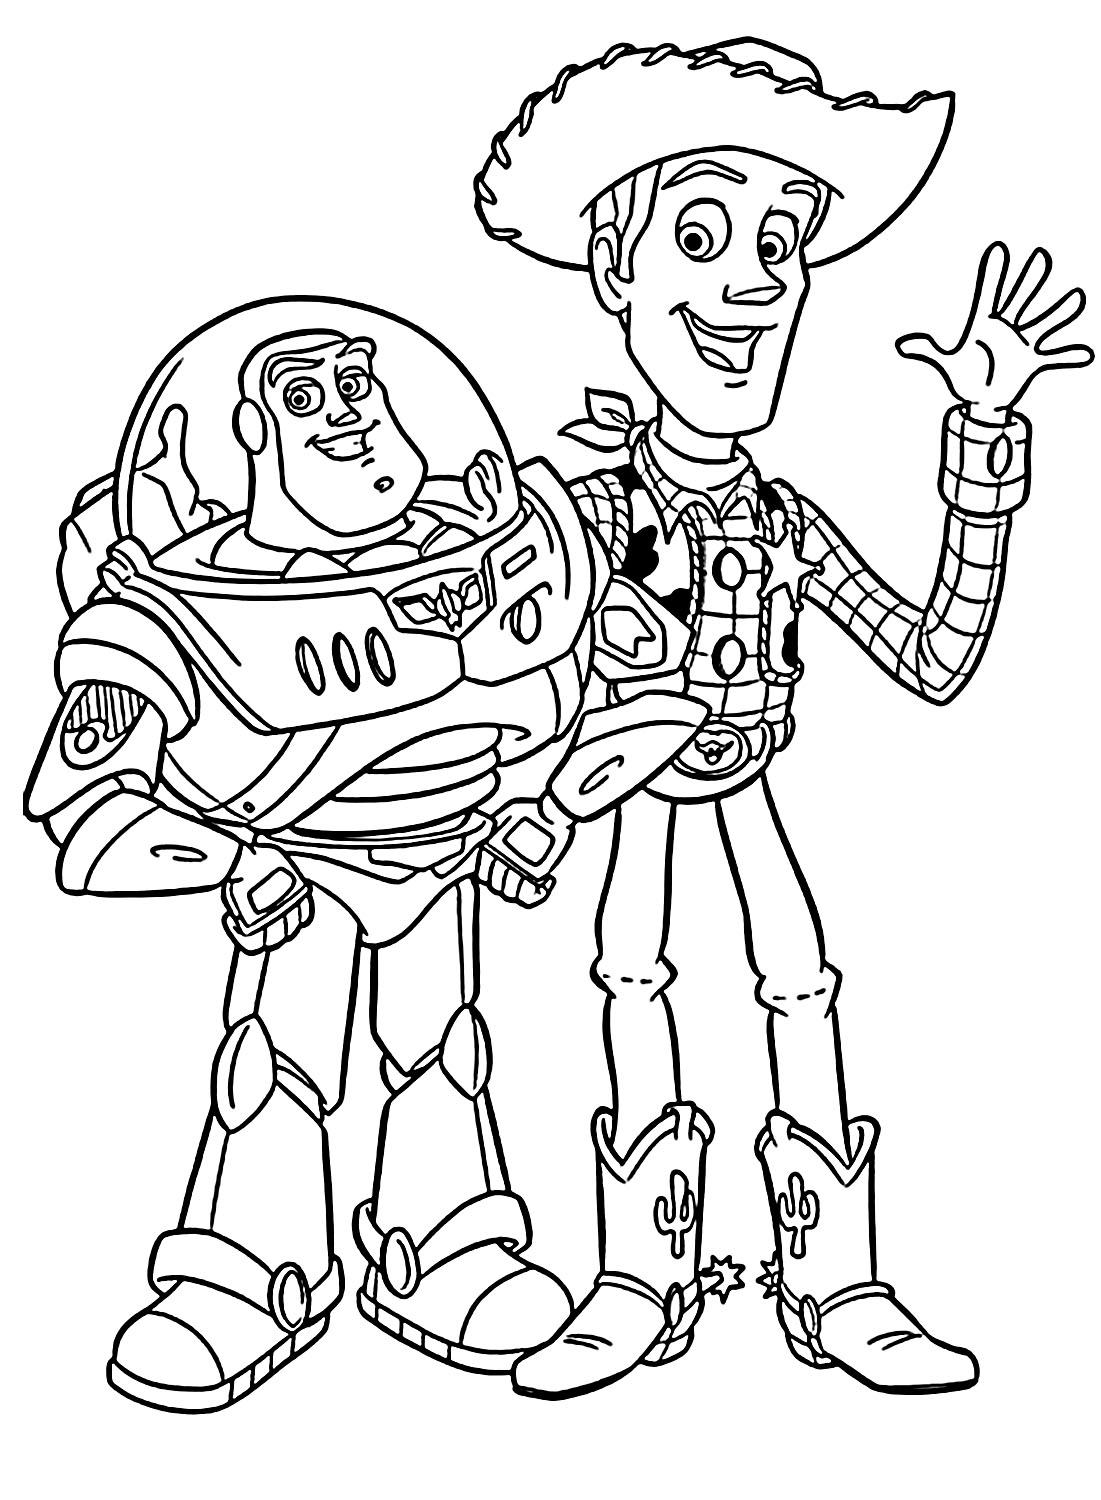 Woody en Buzz uit Toy Story